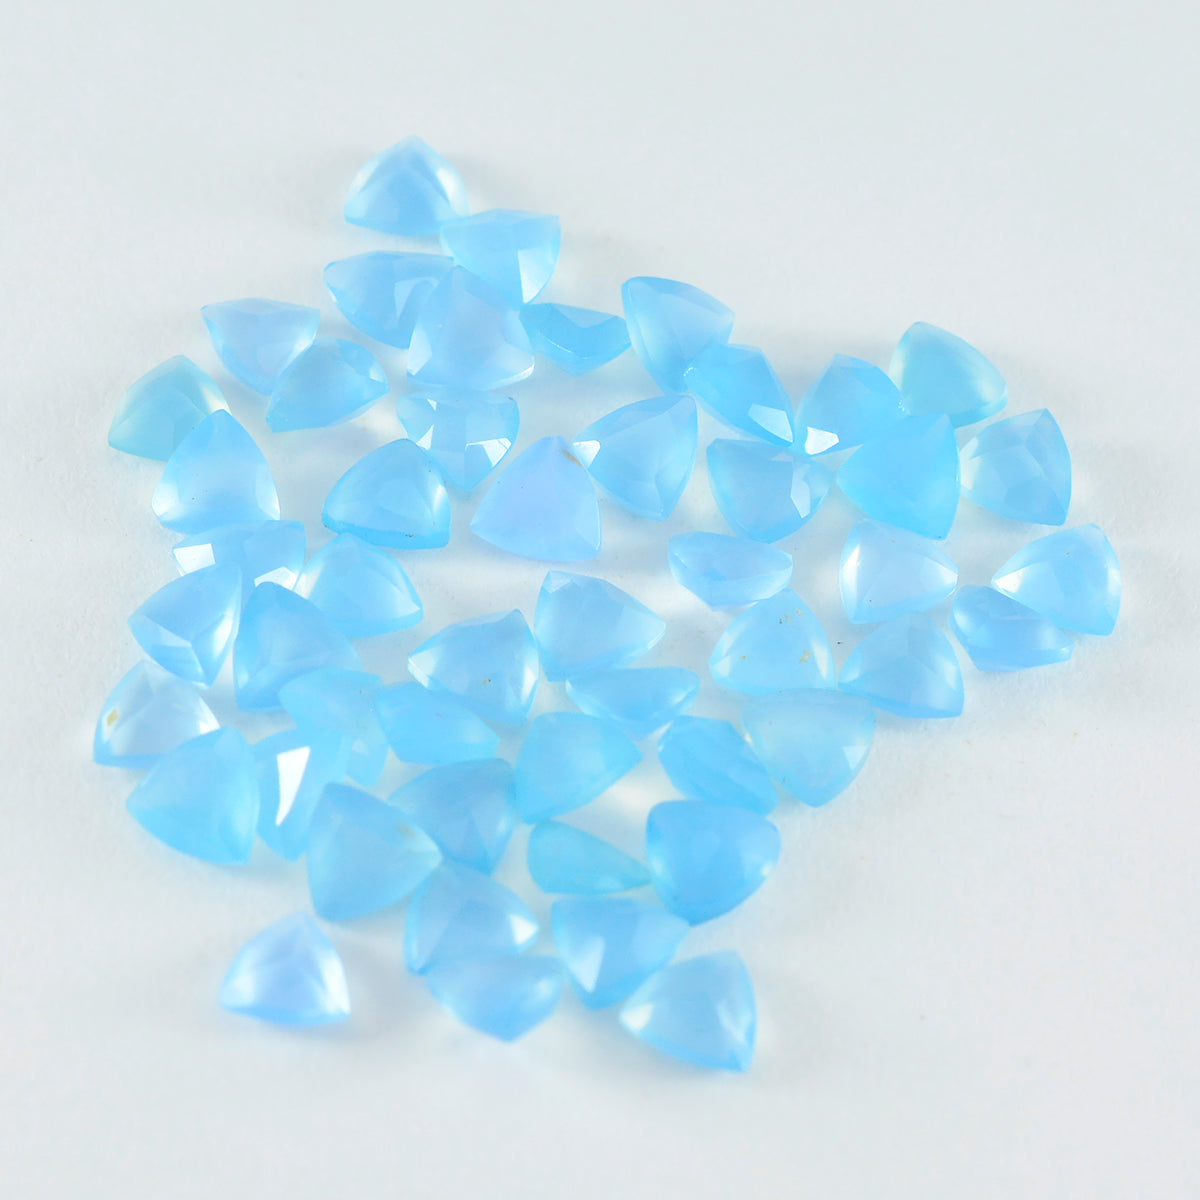 Riyogems 1PC Real Blue Chalcedony Faceted 5X5 mm Trillion Shape pretty Quality Loose Gemstone